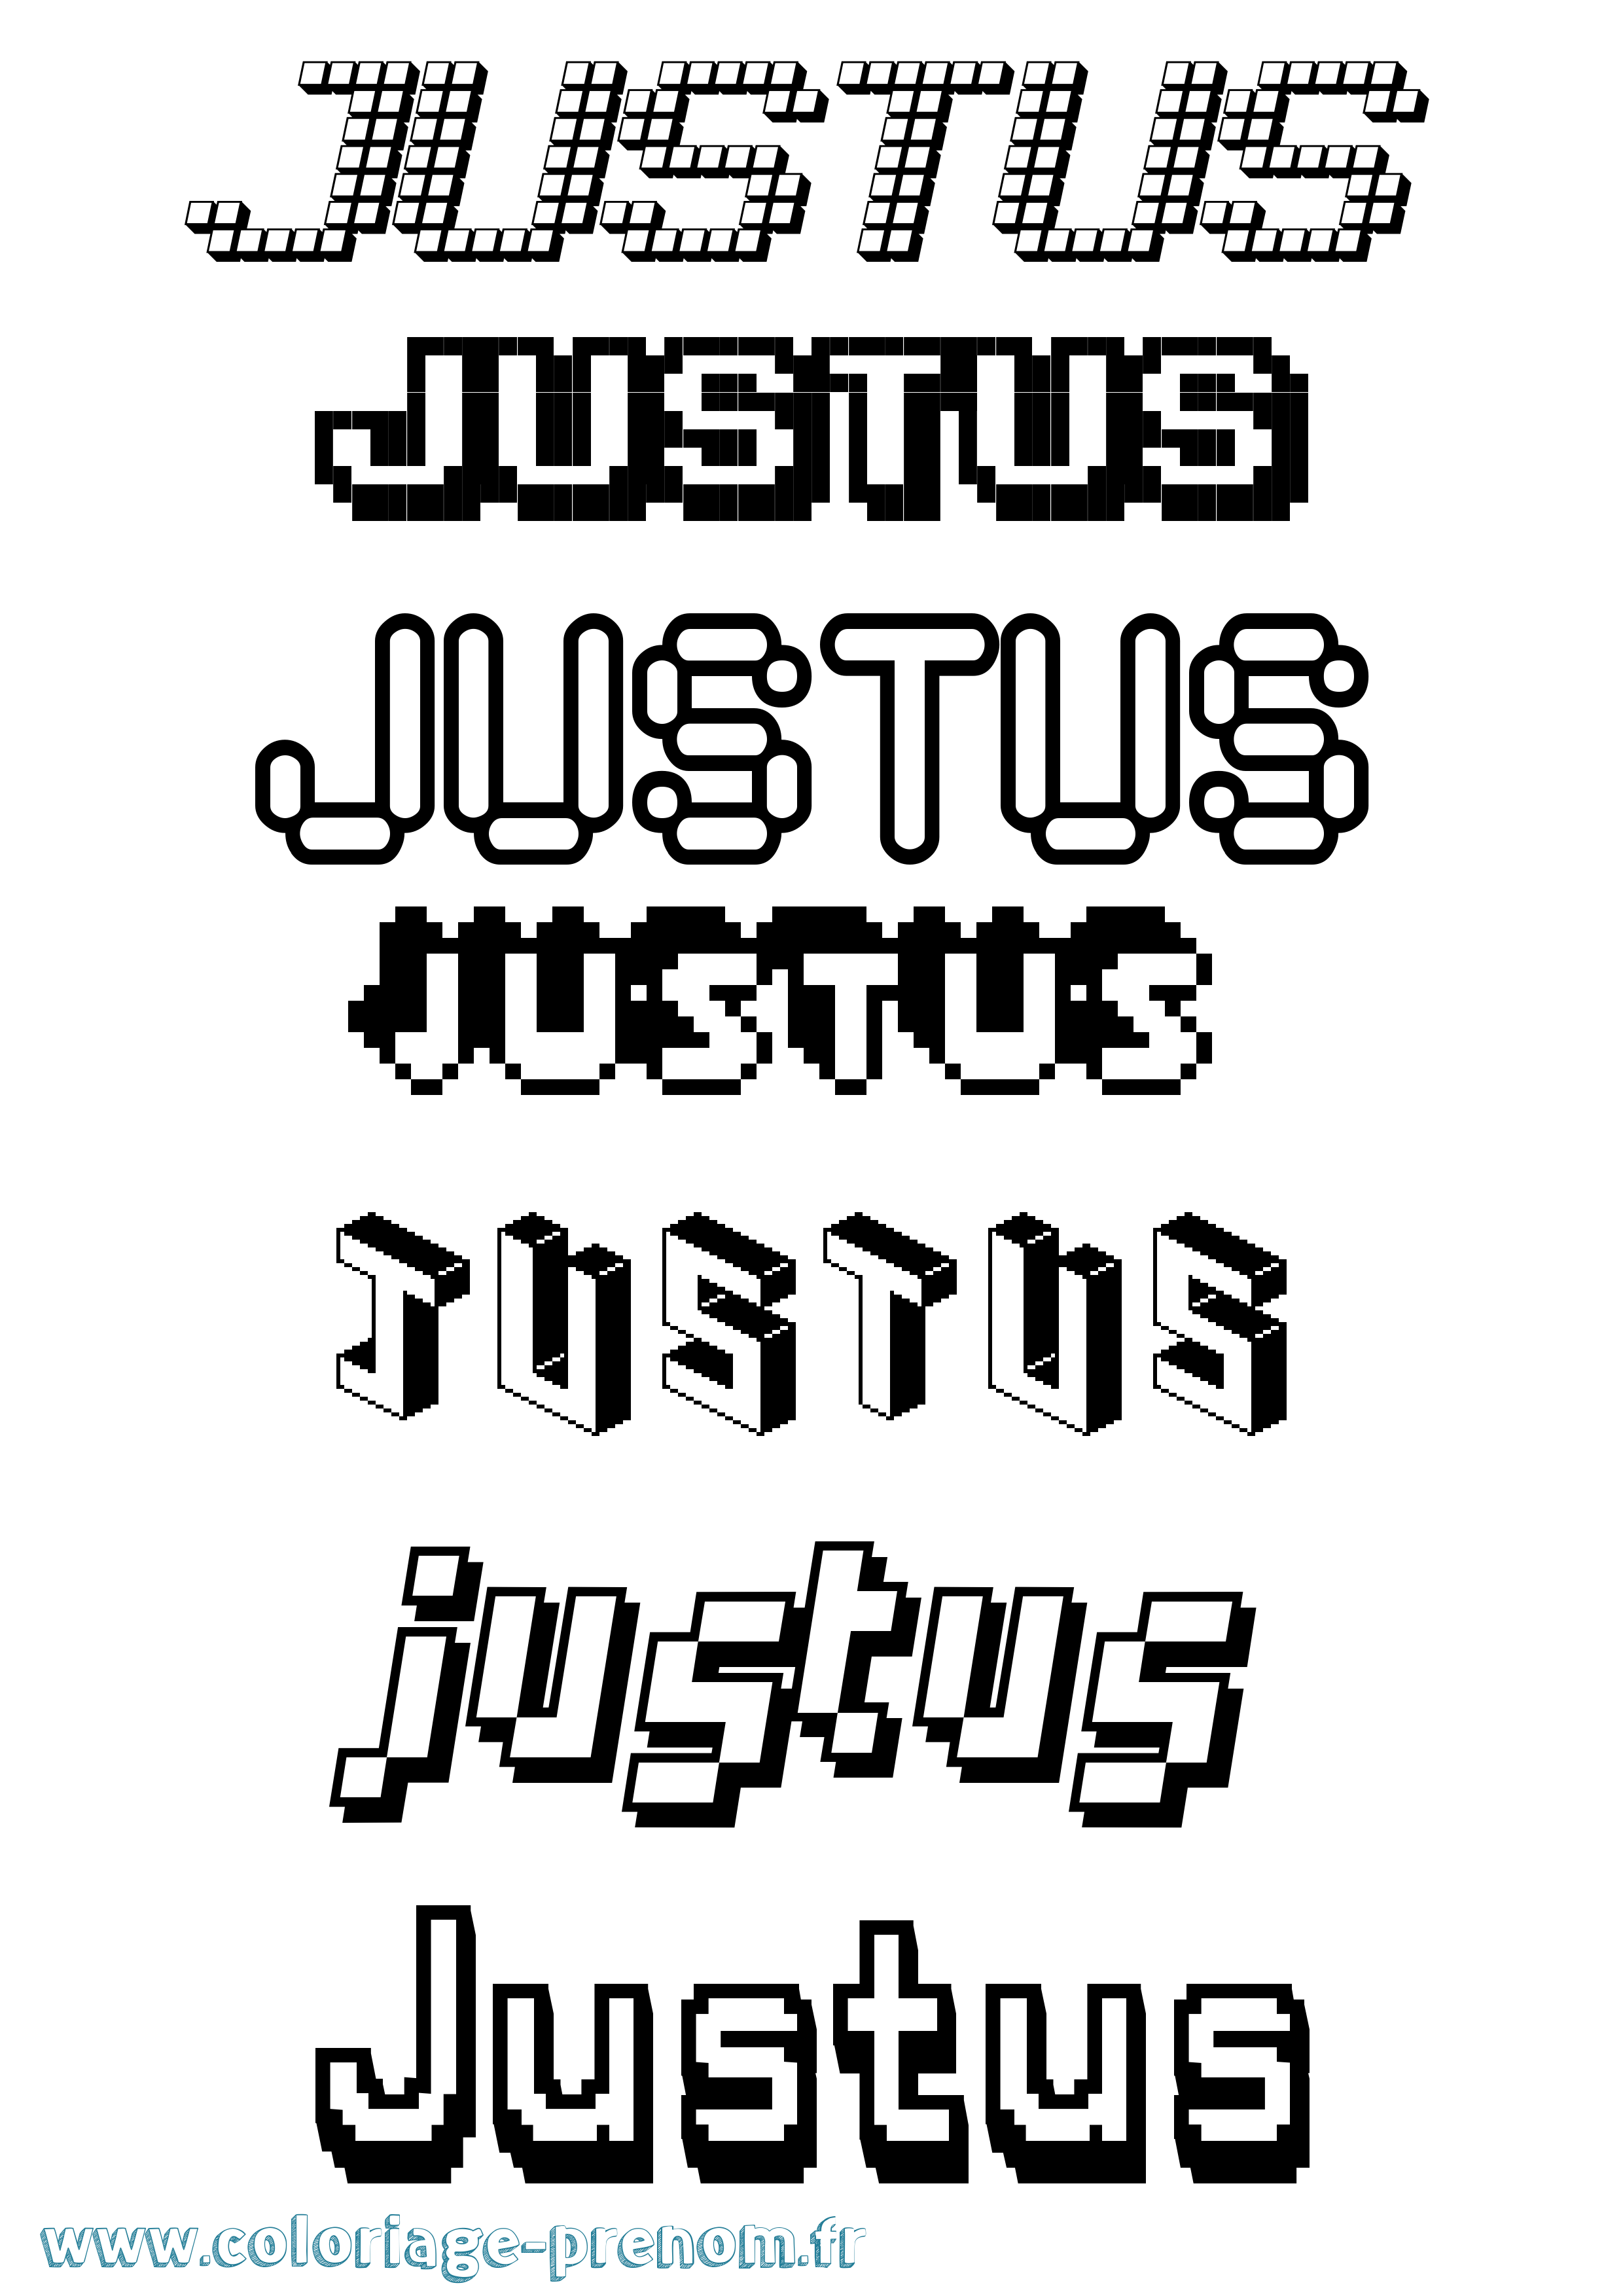 Coloriage prénom Justus Pixel